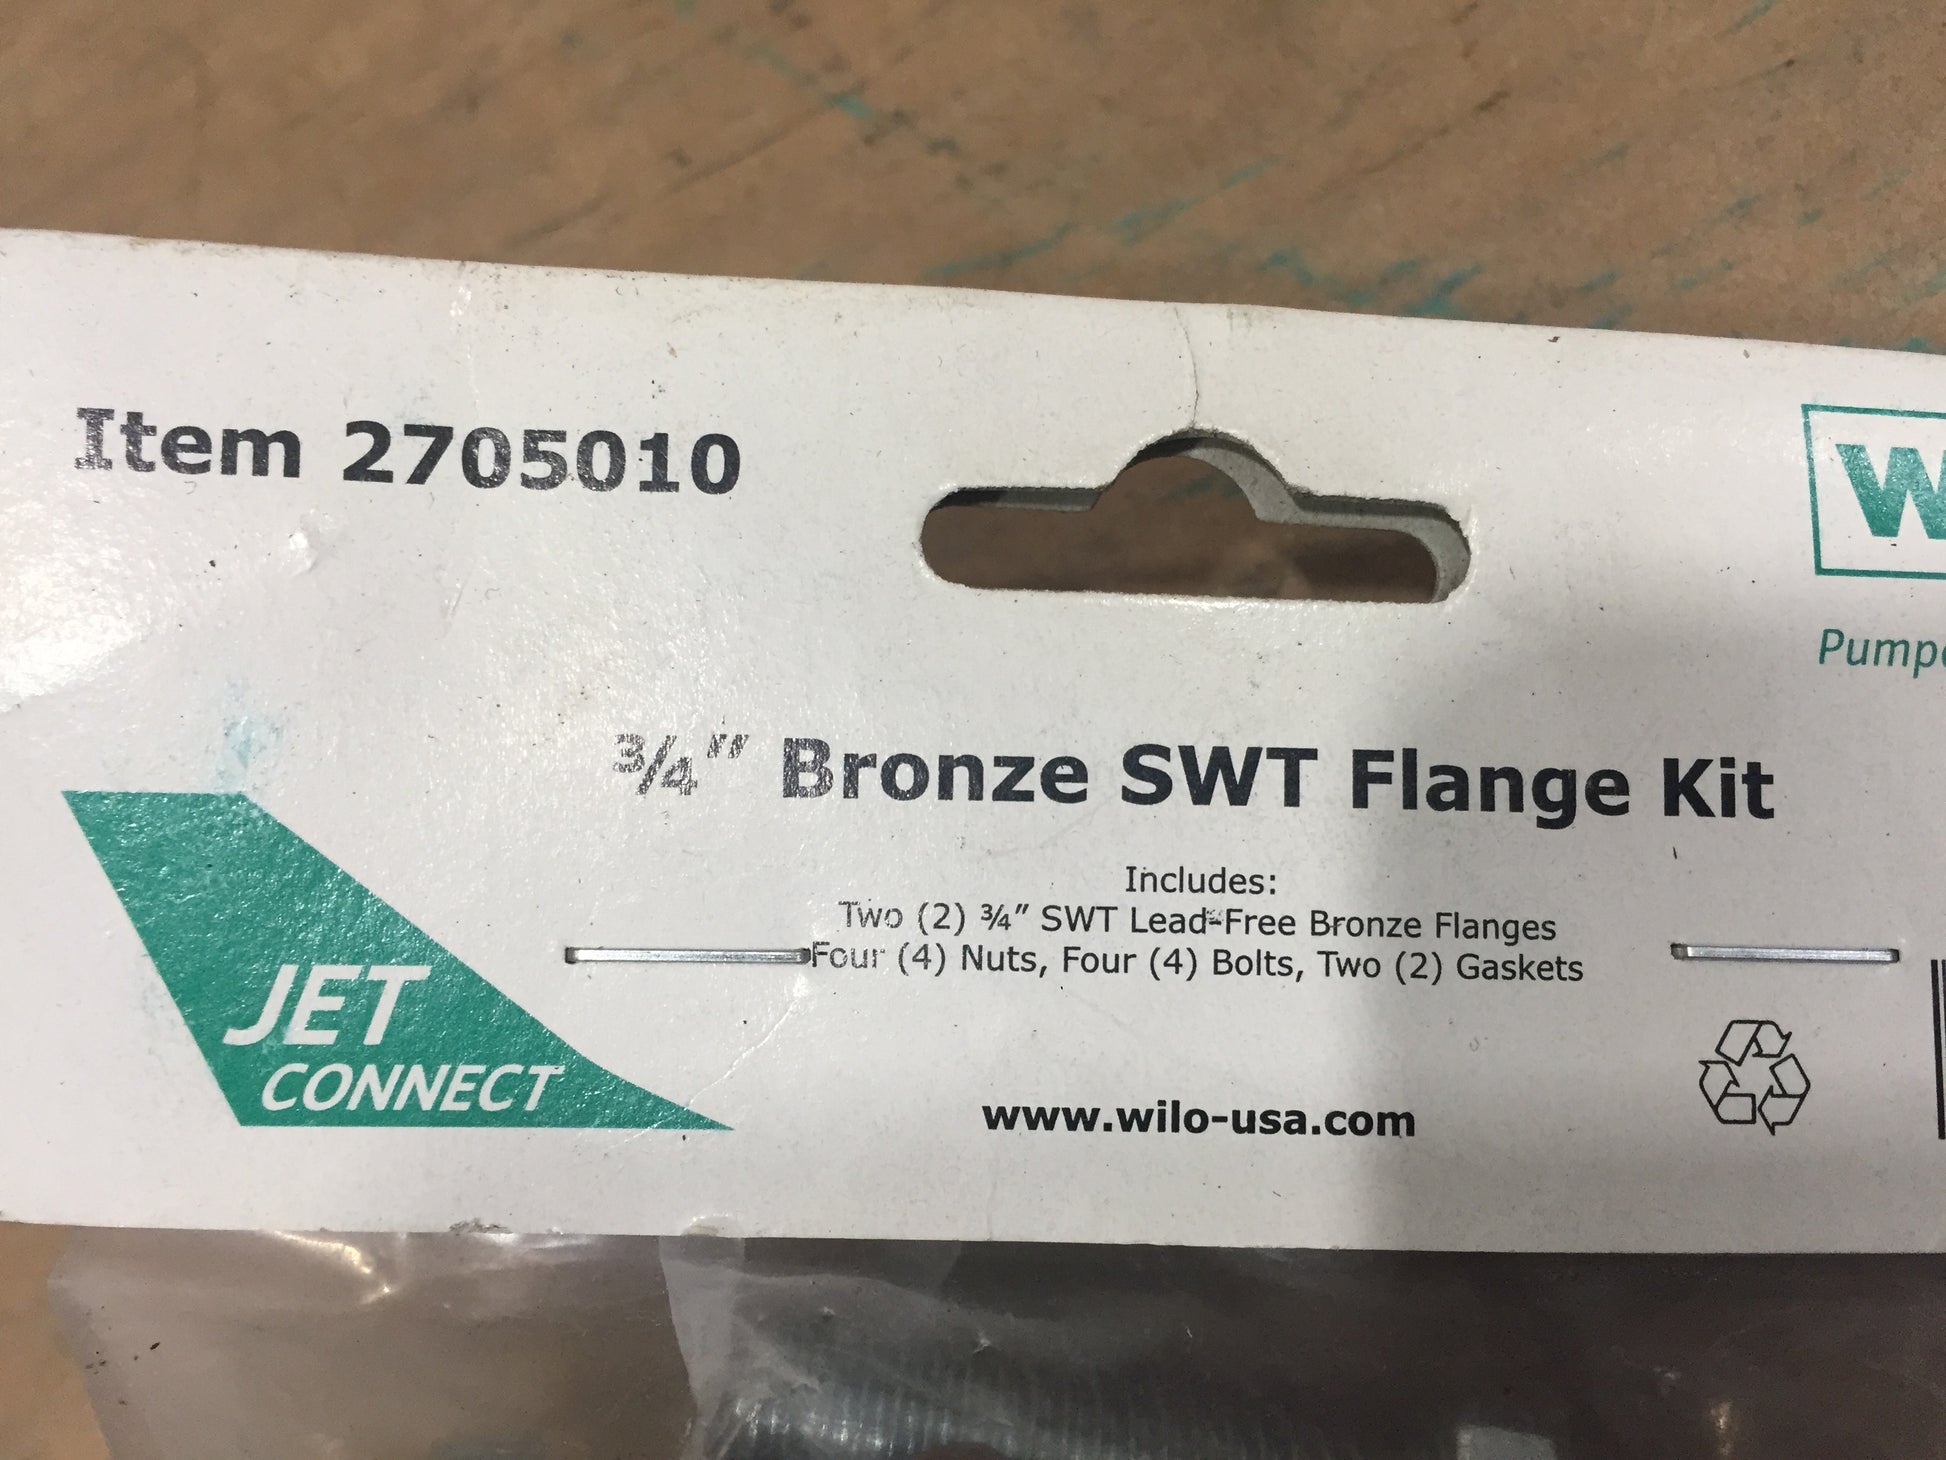 3/4" BRONZE SWEAT FLANGE KIT